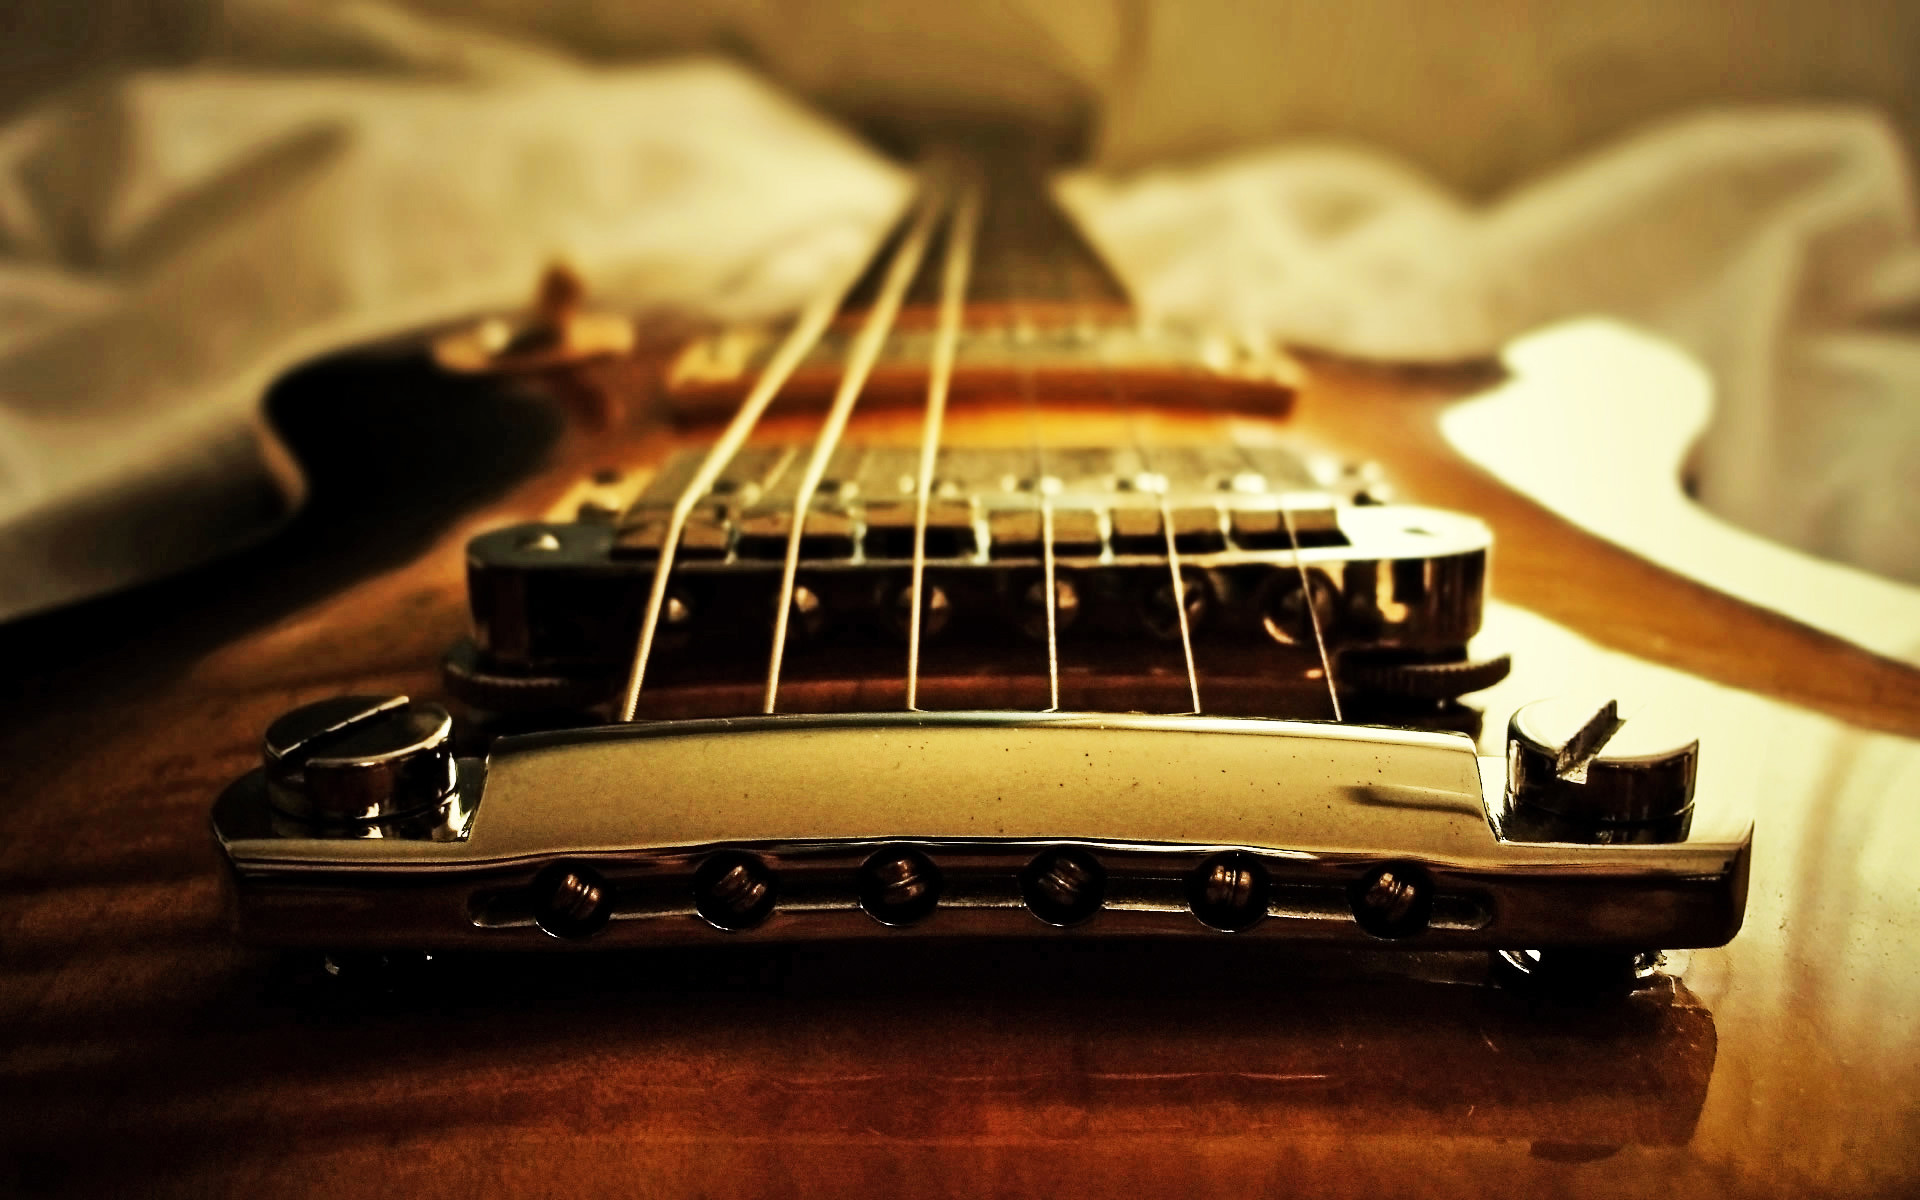 country musik wallpaper,gitarre,musikinstrument,gezupfte saiteninstrumente,bassgitarre,saiteninstrument zubehör